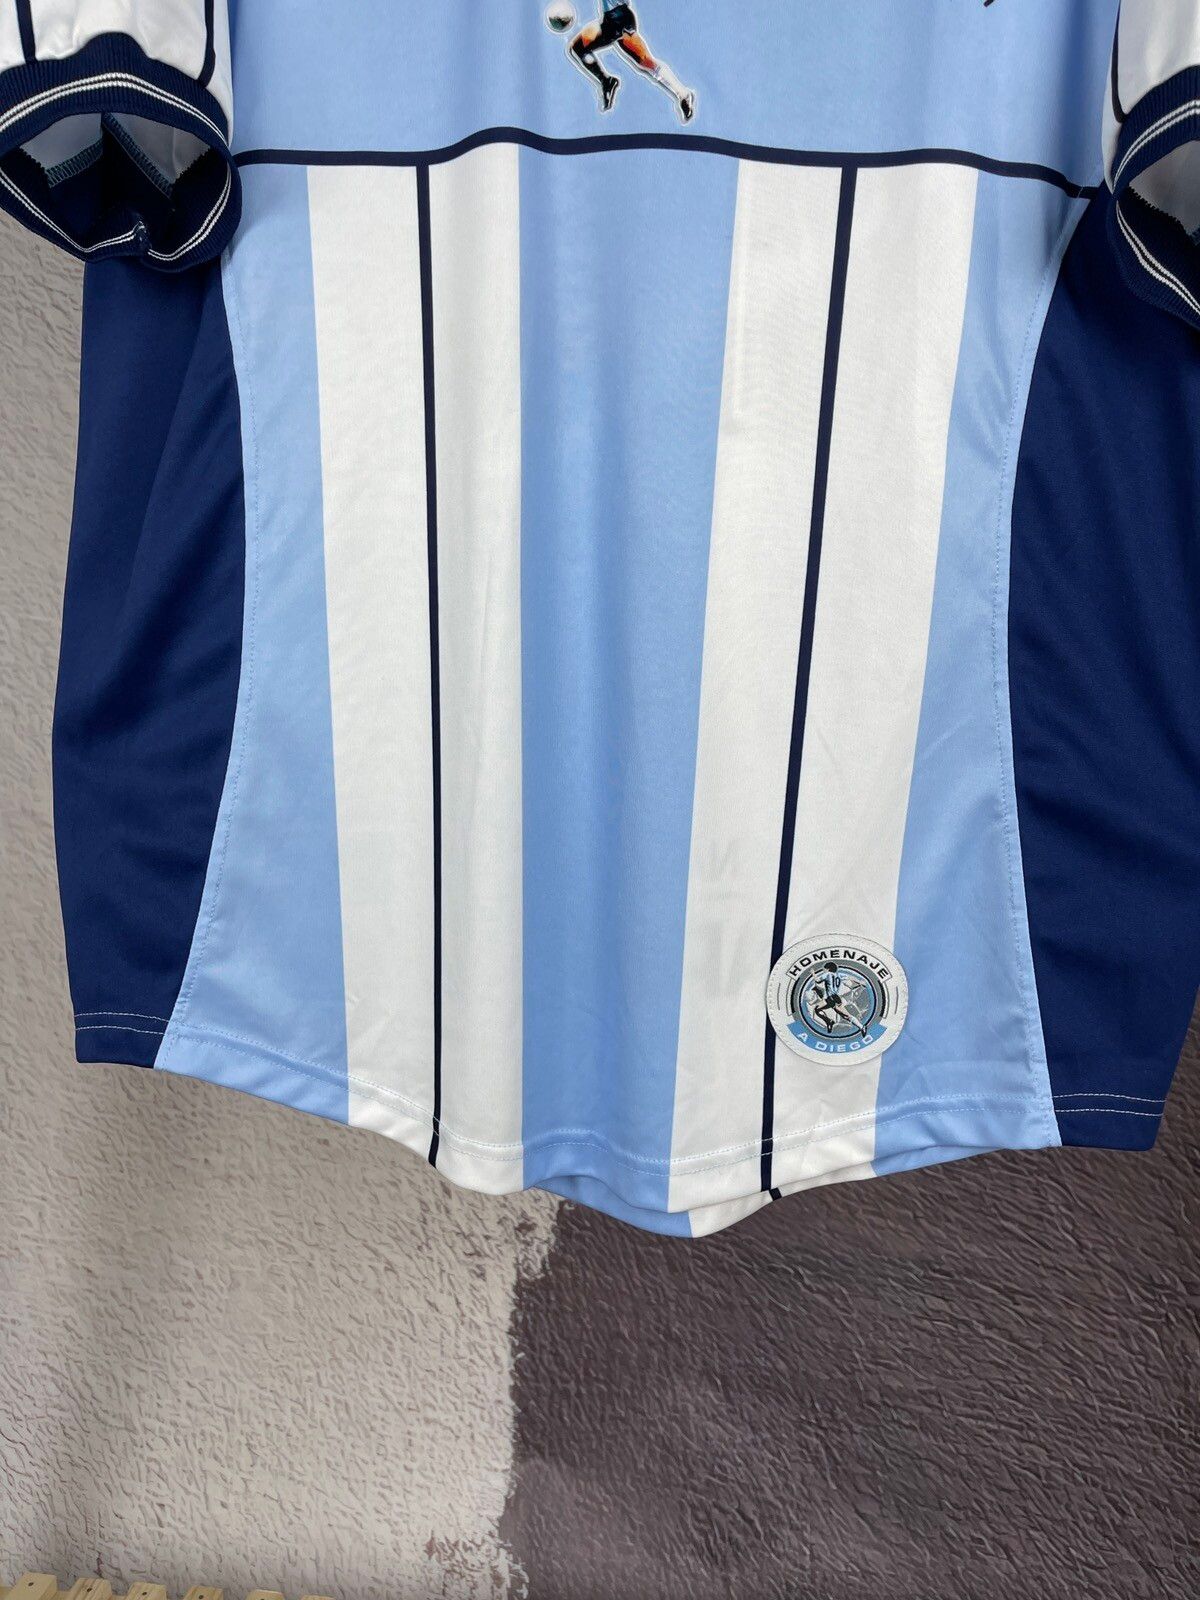 Soccer Jersey Limited Edition Jersey Argentina Maradona football soccer Size US M / EU 48-50 / 2 - 7 Thumbnail